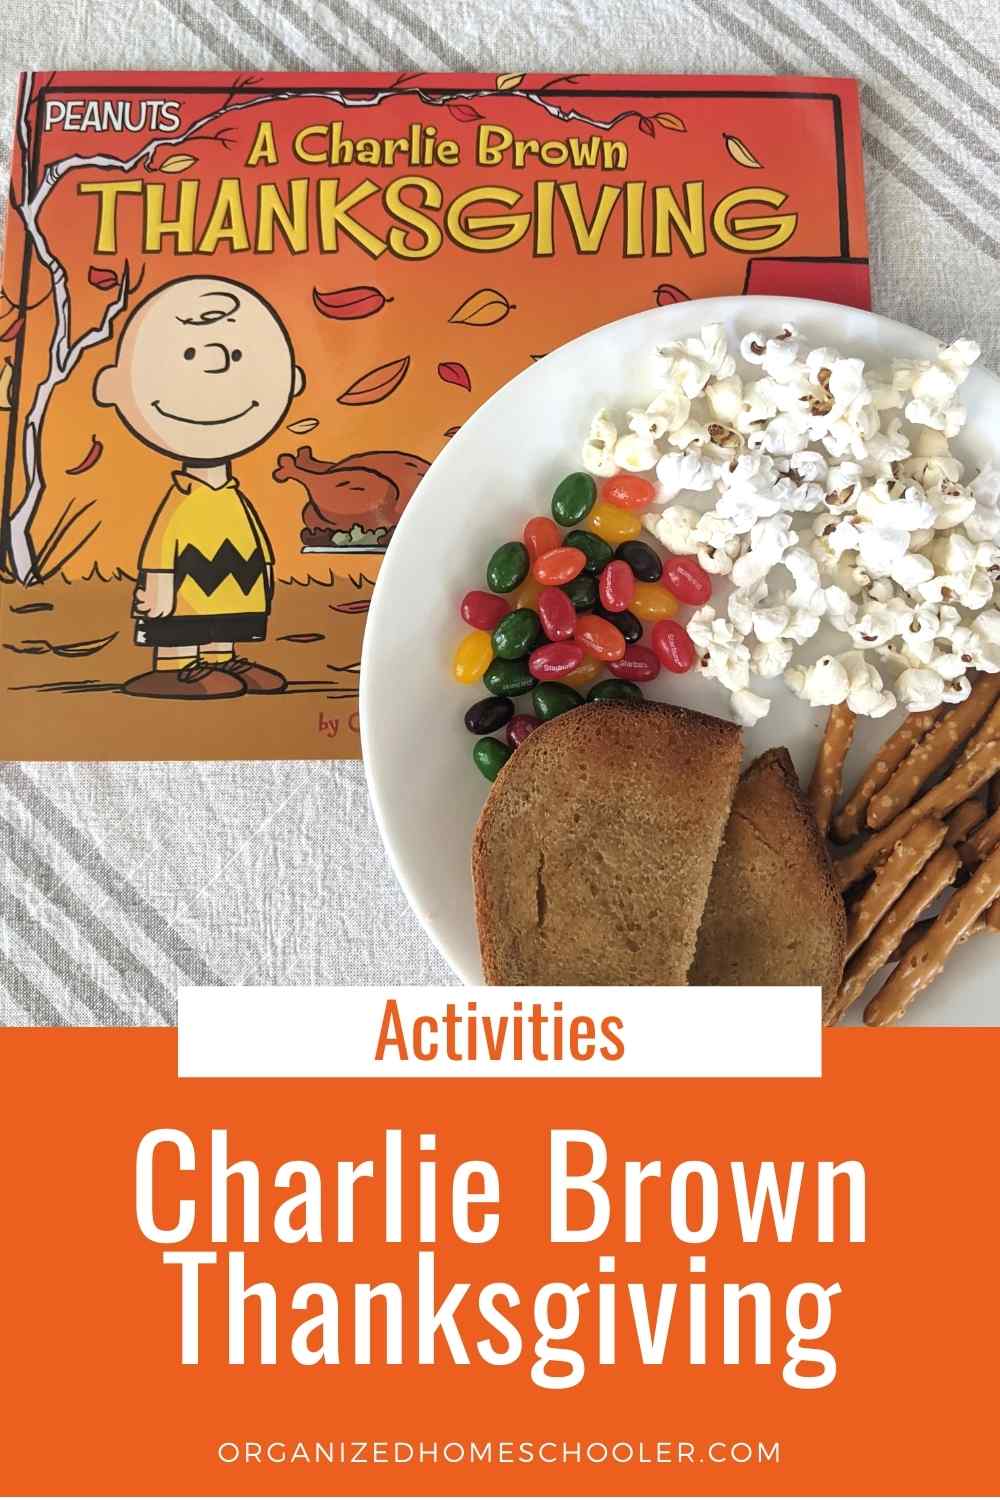 Charlie brown thanksgiving activities the organized homeschooler